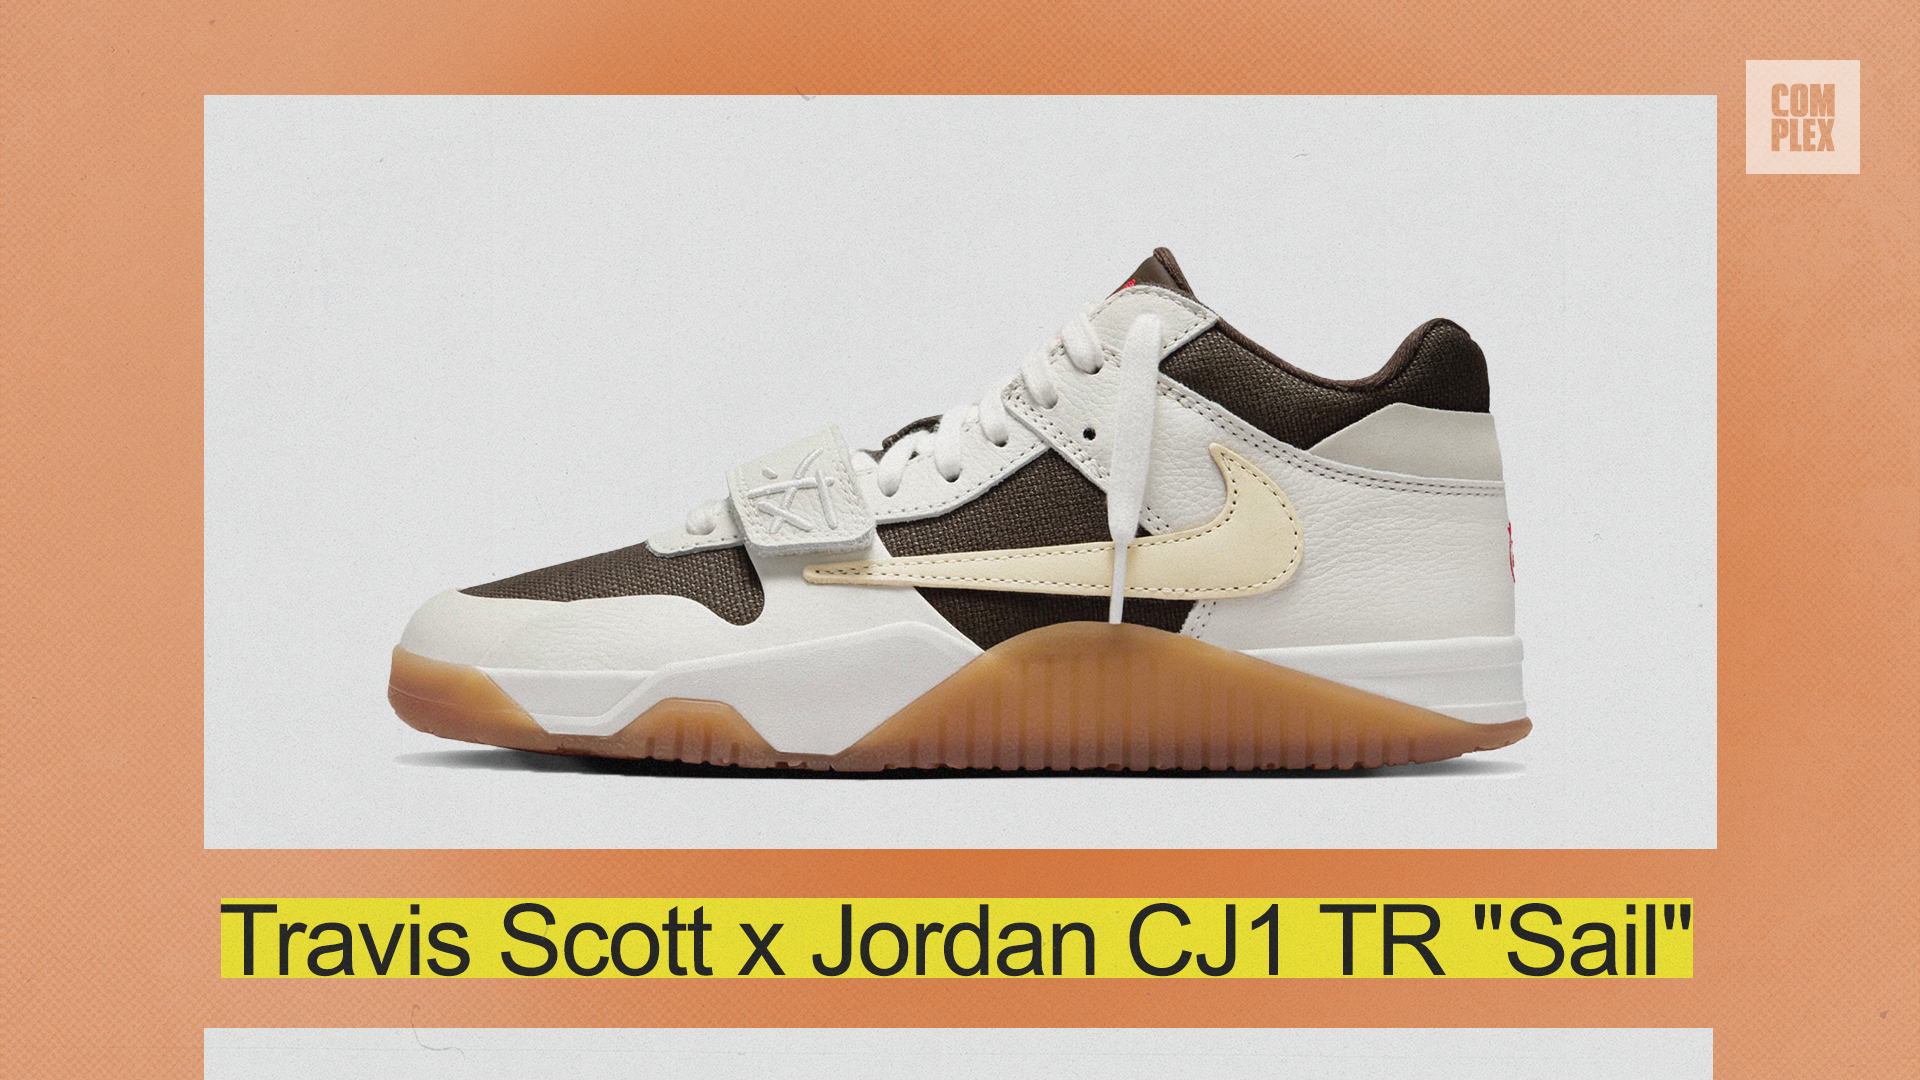 Sail-colored Travis Scott x Jordan CJ1 TR sneaker with a white and brown design, featuring a cream Nike swoosh and a gum sole. &quot;Travis Scott x Jordan CJ1 TR &#x27;Sail&#x27;&quot; is written below